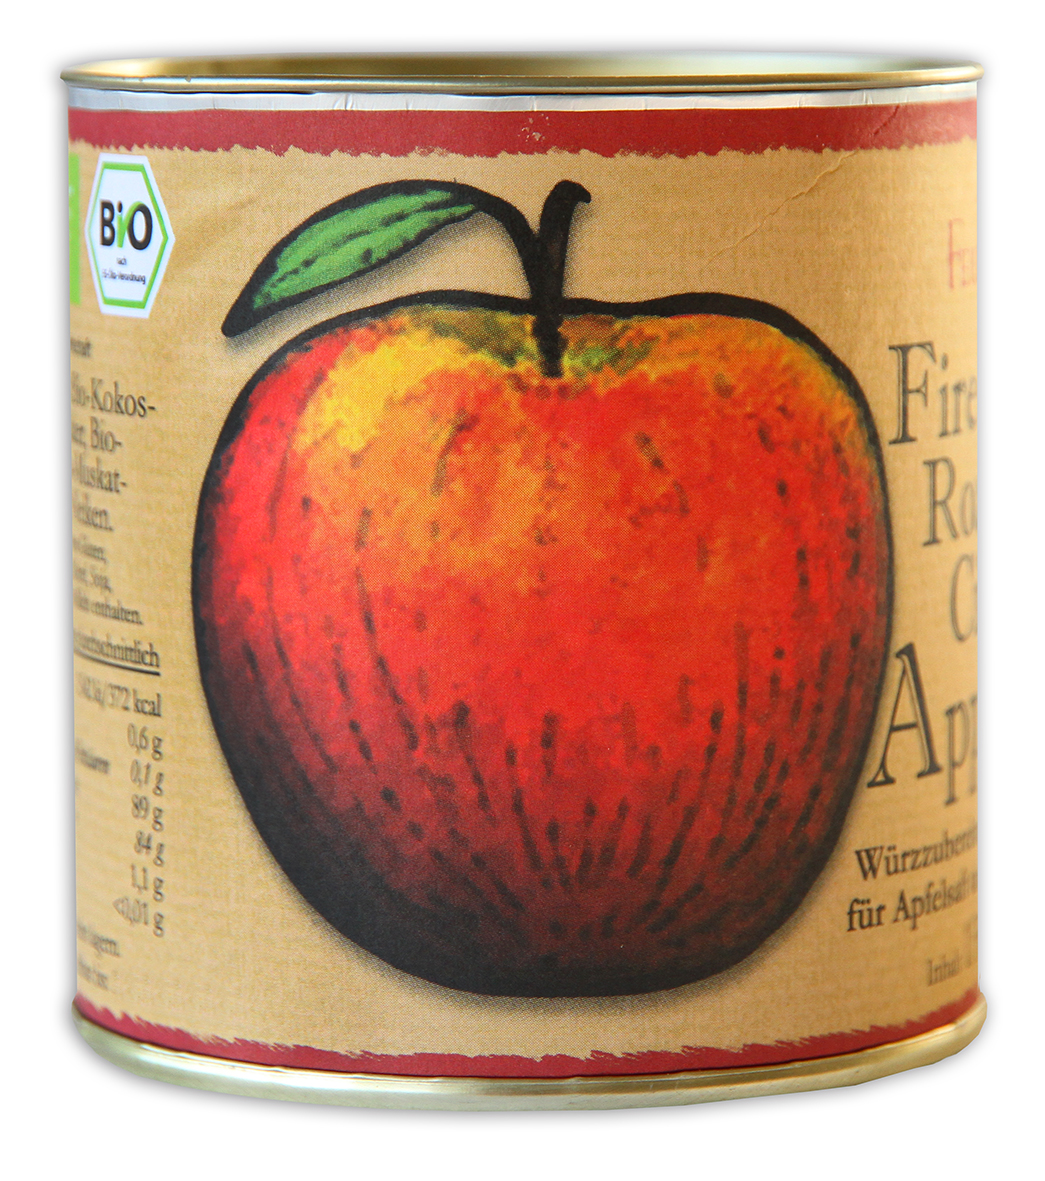 1 VE 24 Stück: Fire Roasted Cinnamon Apple Spices  Füllgewicht: 130g